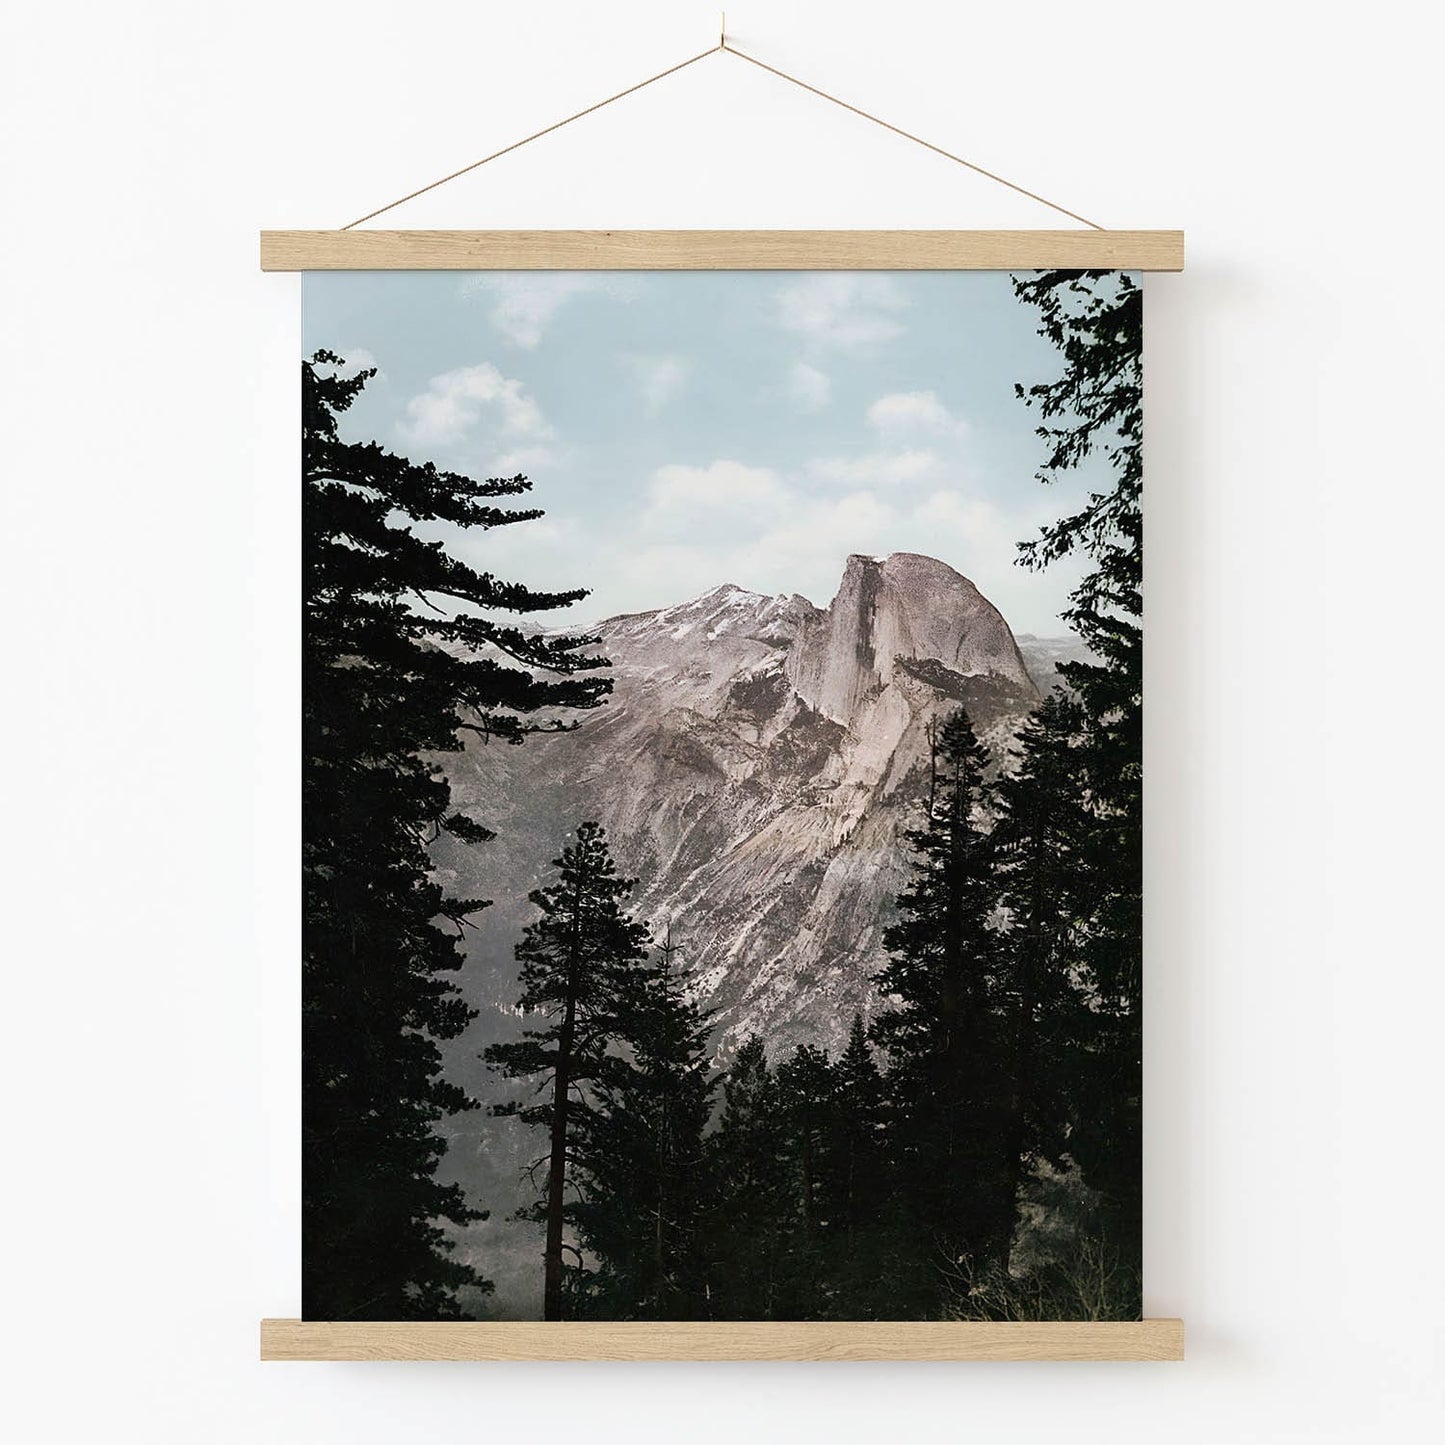 Vintage Yosemite Valley National Park Art Print in Wood Hanger Frame on Wall